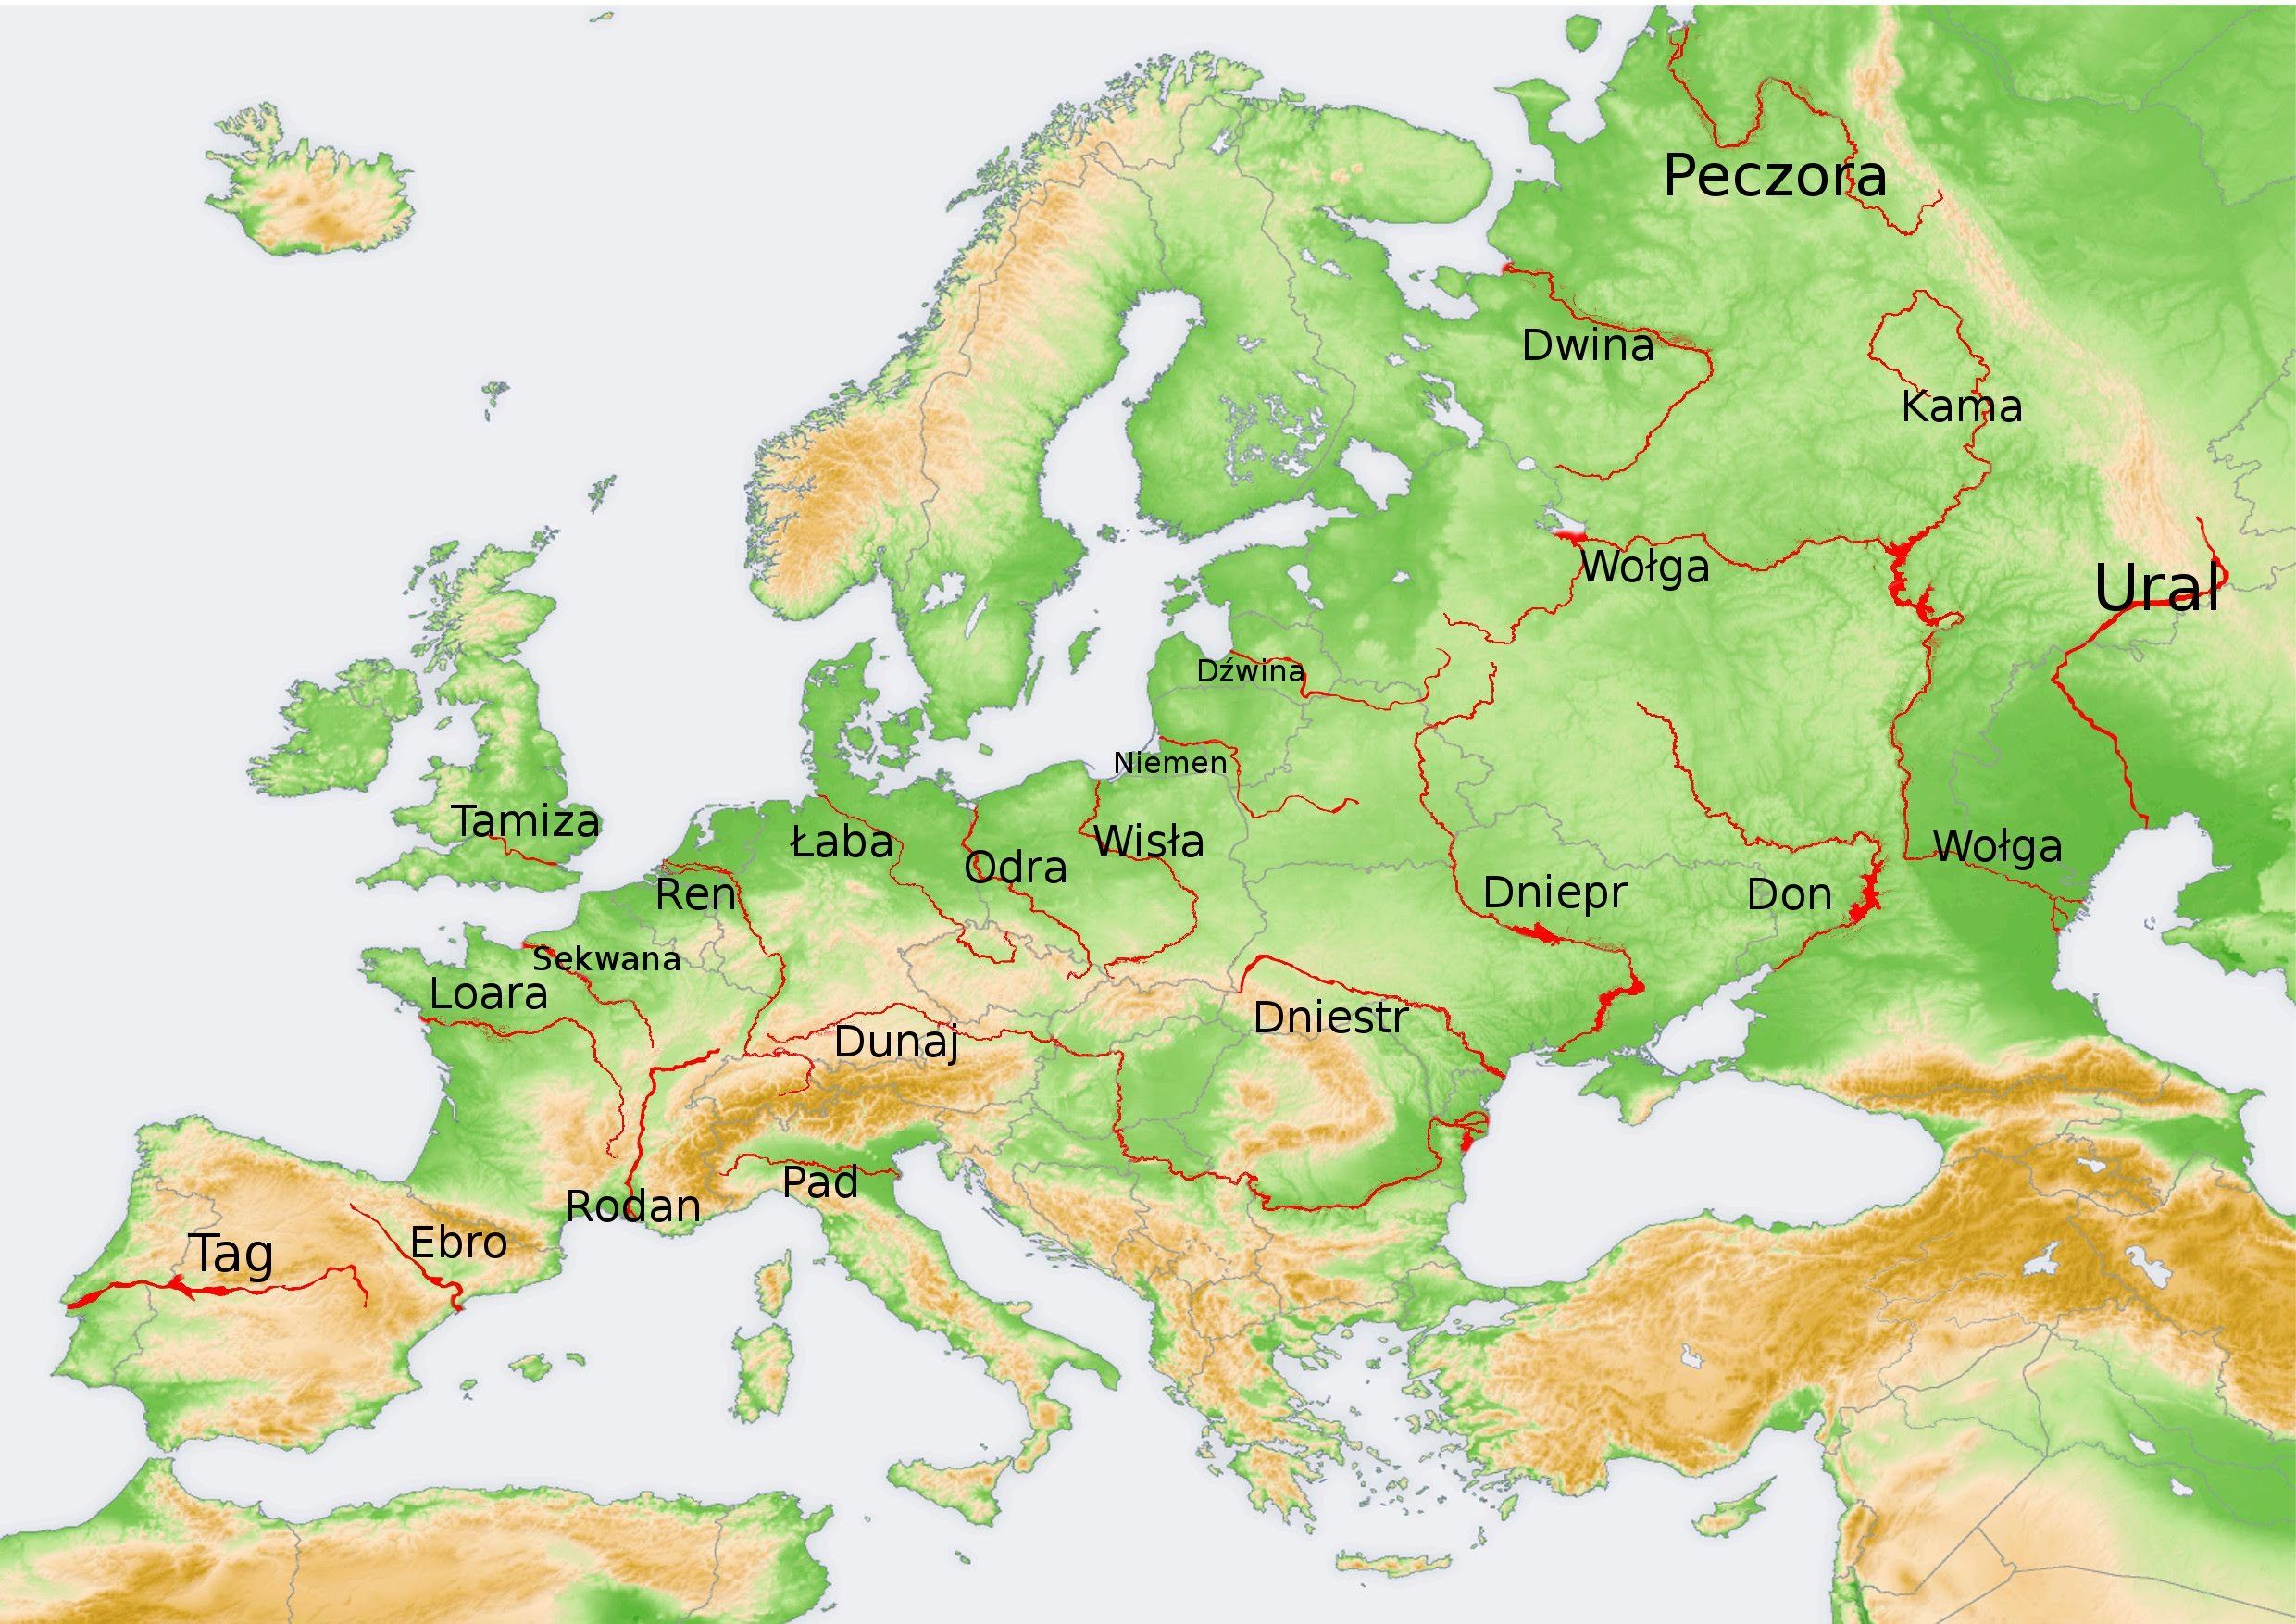 s-4 sb-2-Mapa Europyimg_no 101.jpg